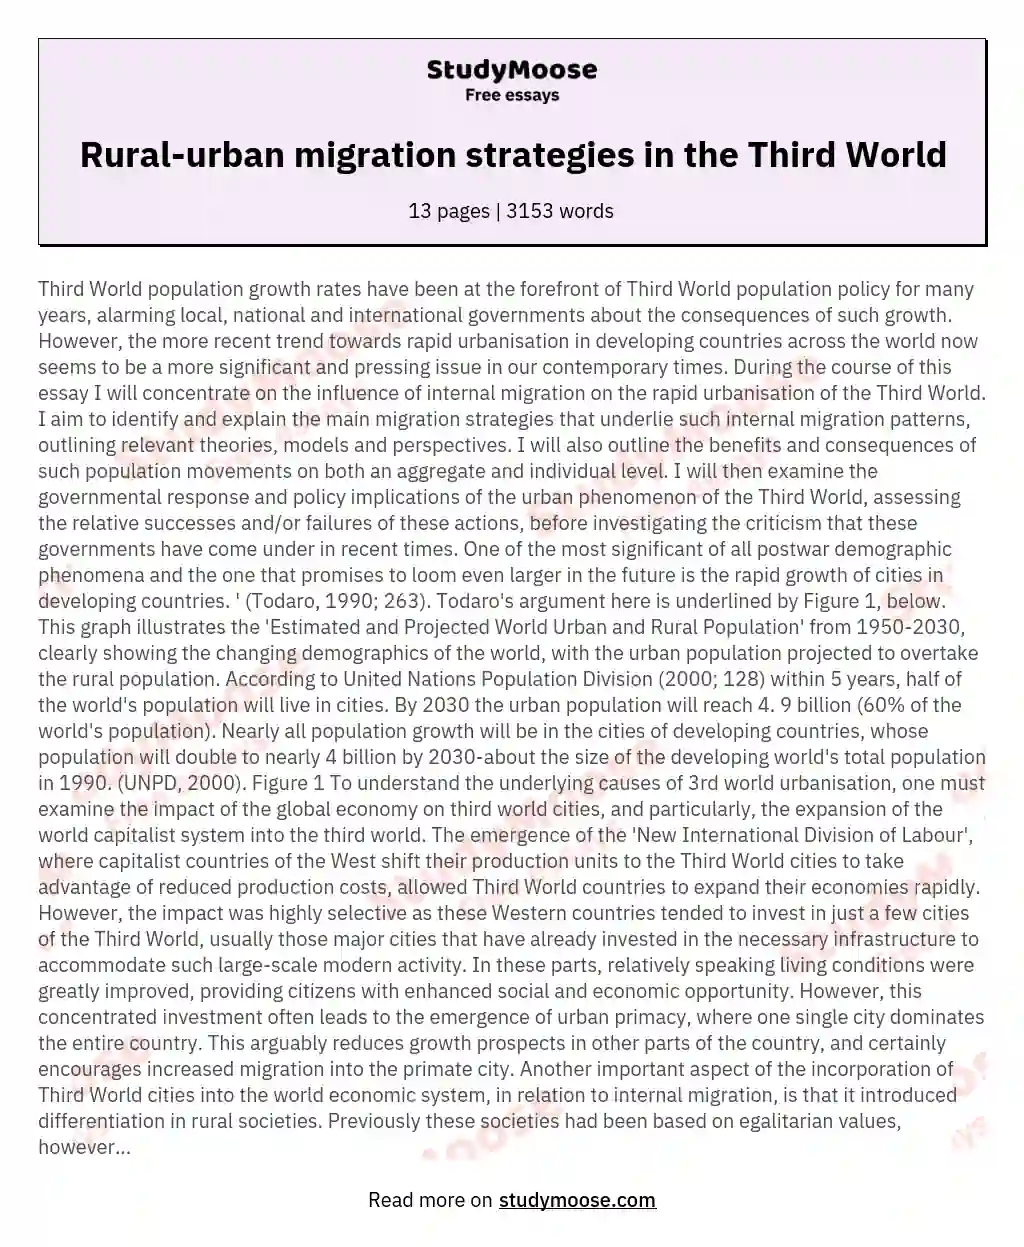 Rural-urban migration strategies in the Third World